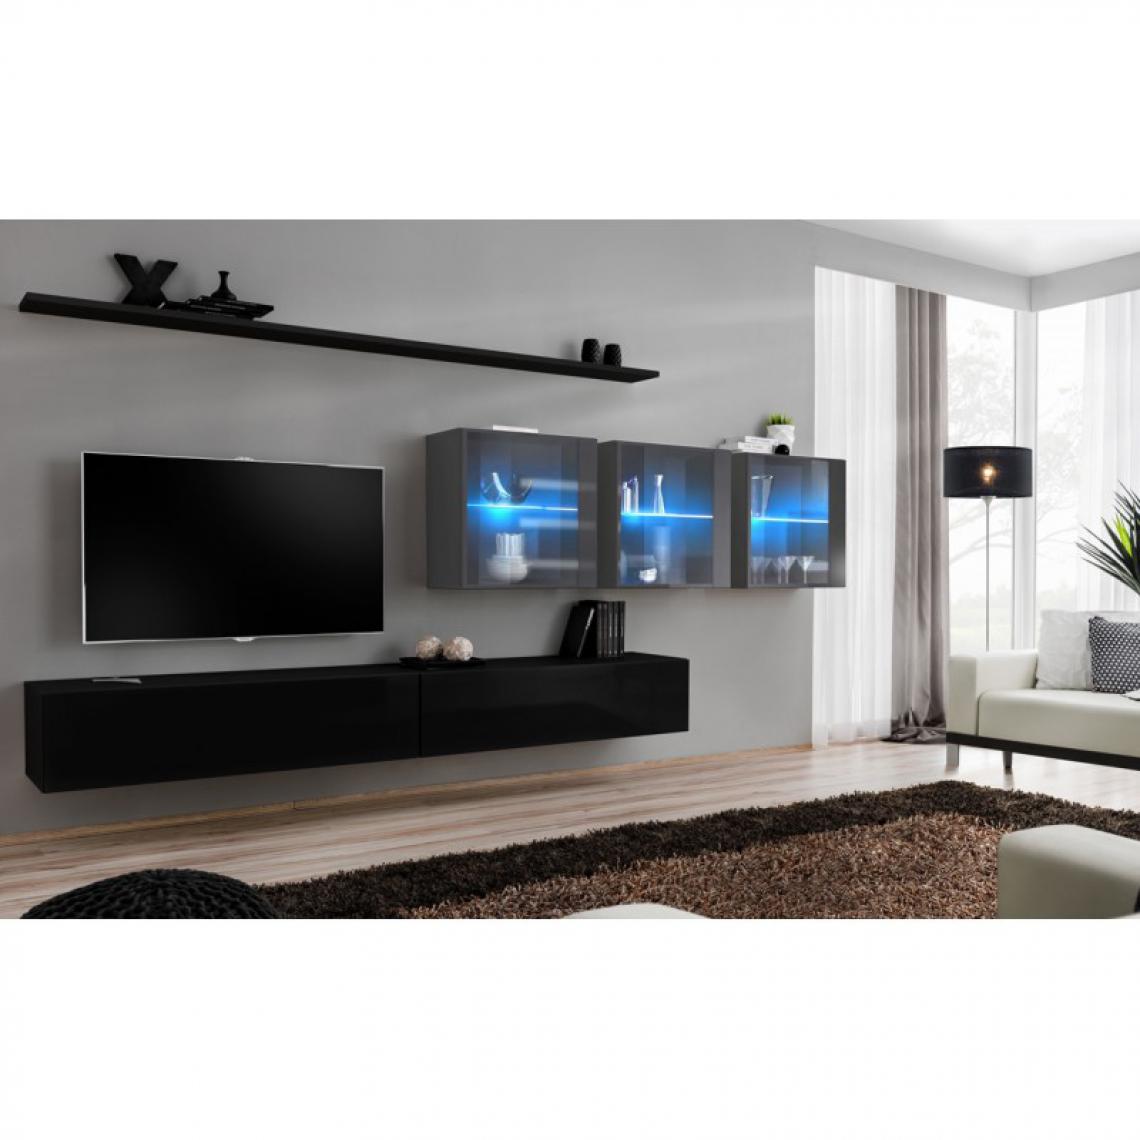 Ac-Deco - Meuble TV Mural Design Switch XVII 340cm Noir & Gris - Meubles TV, Hi-Fi